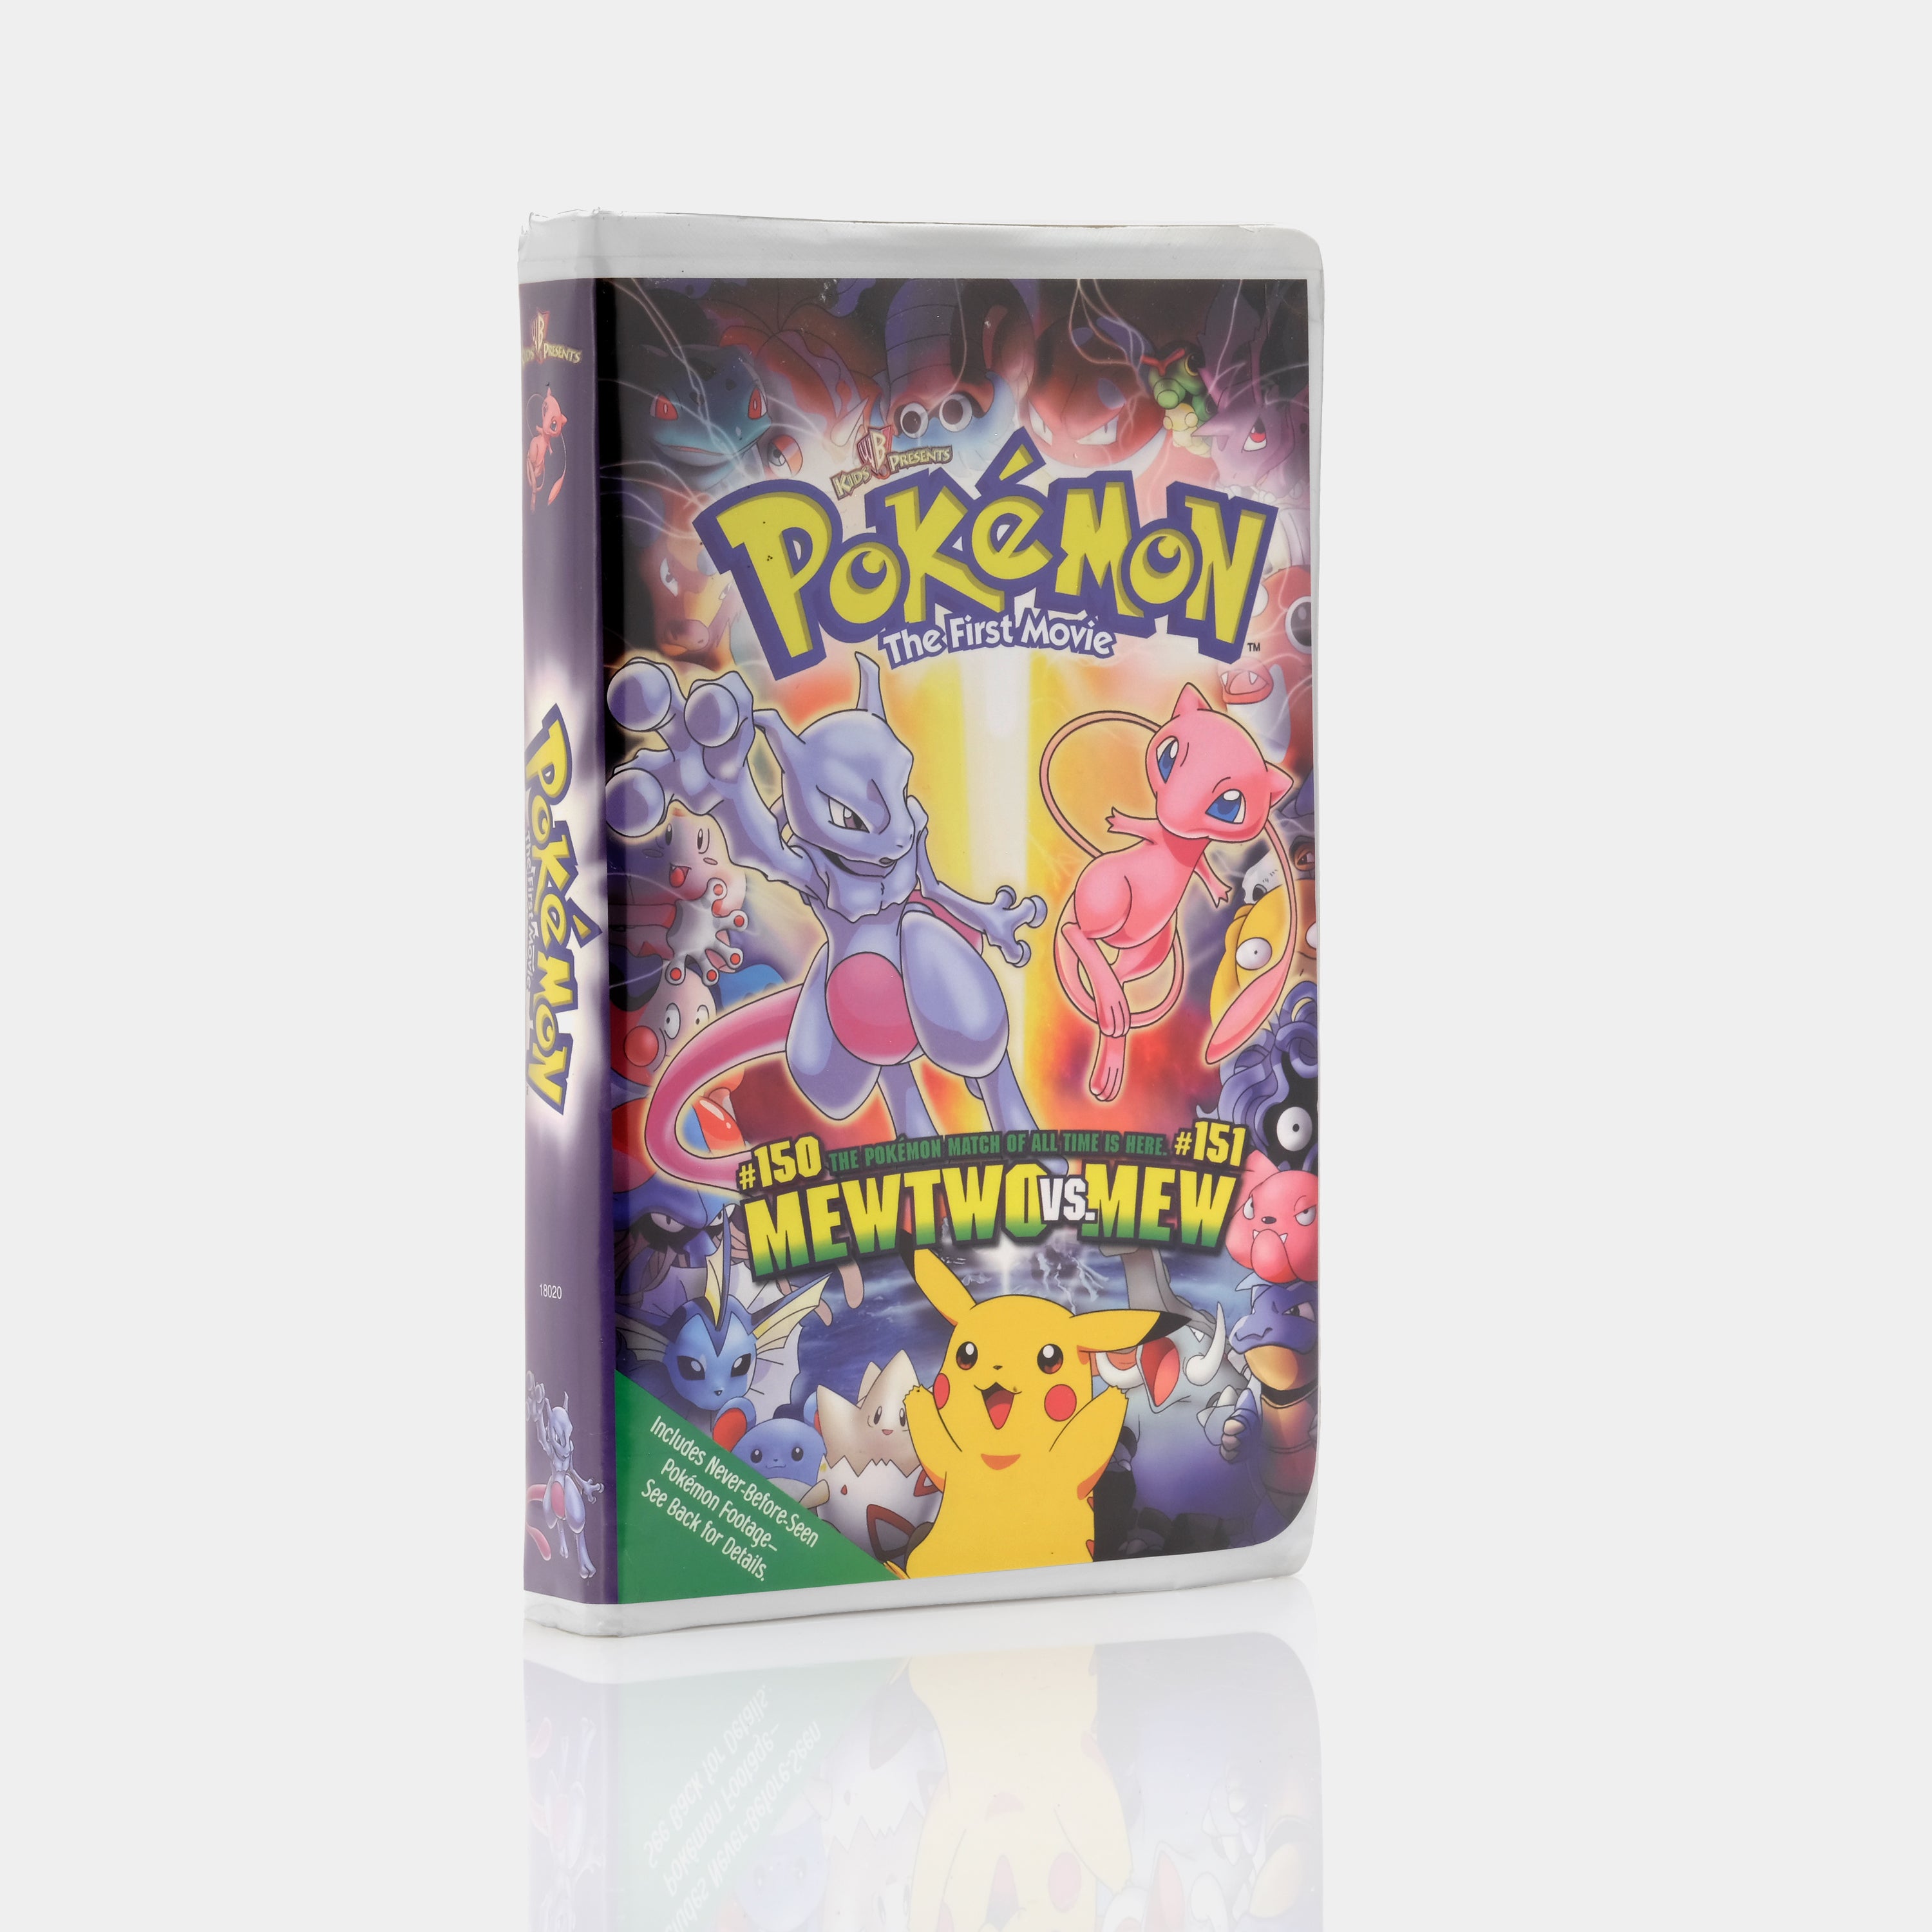 Pokémon The First Movie VHS Tape